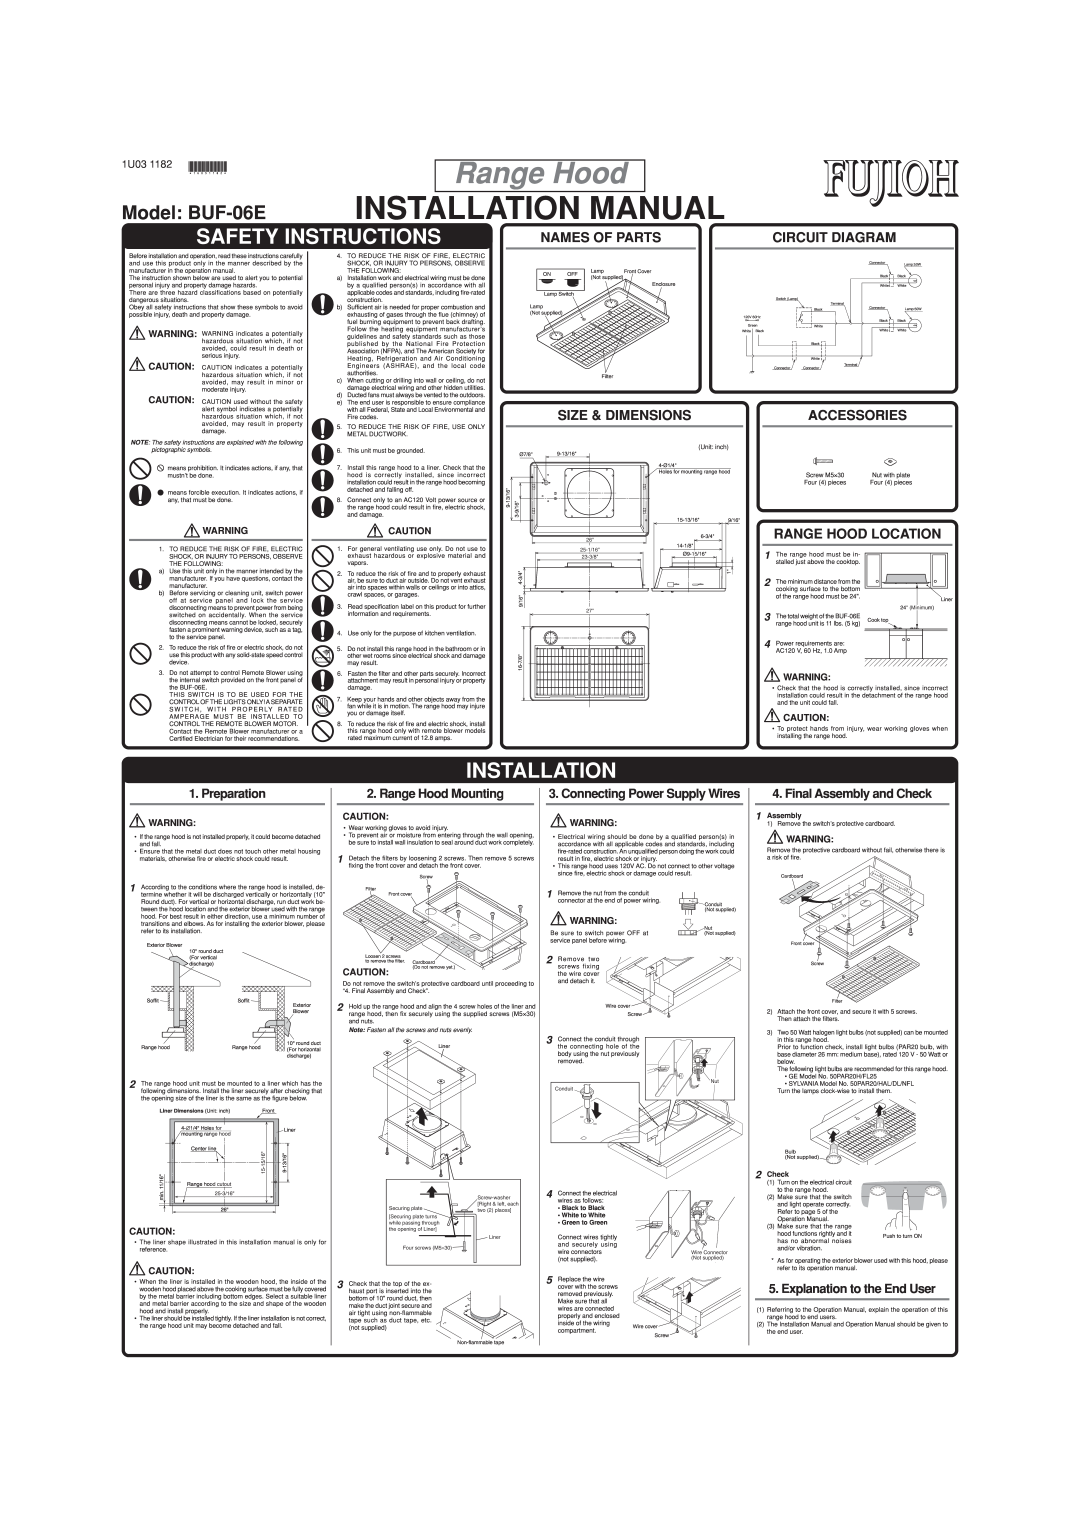 Fujioh installation manual Installation Manual, Range Hood, Safety Instructions, Model BUF-06E, Names Of Parts, 1U03 